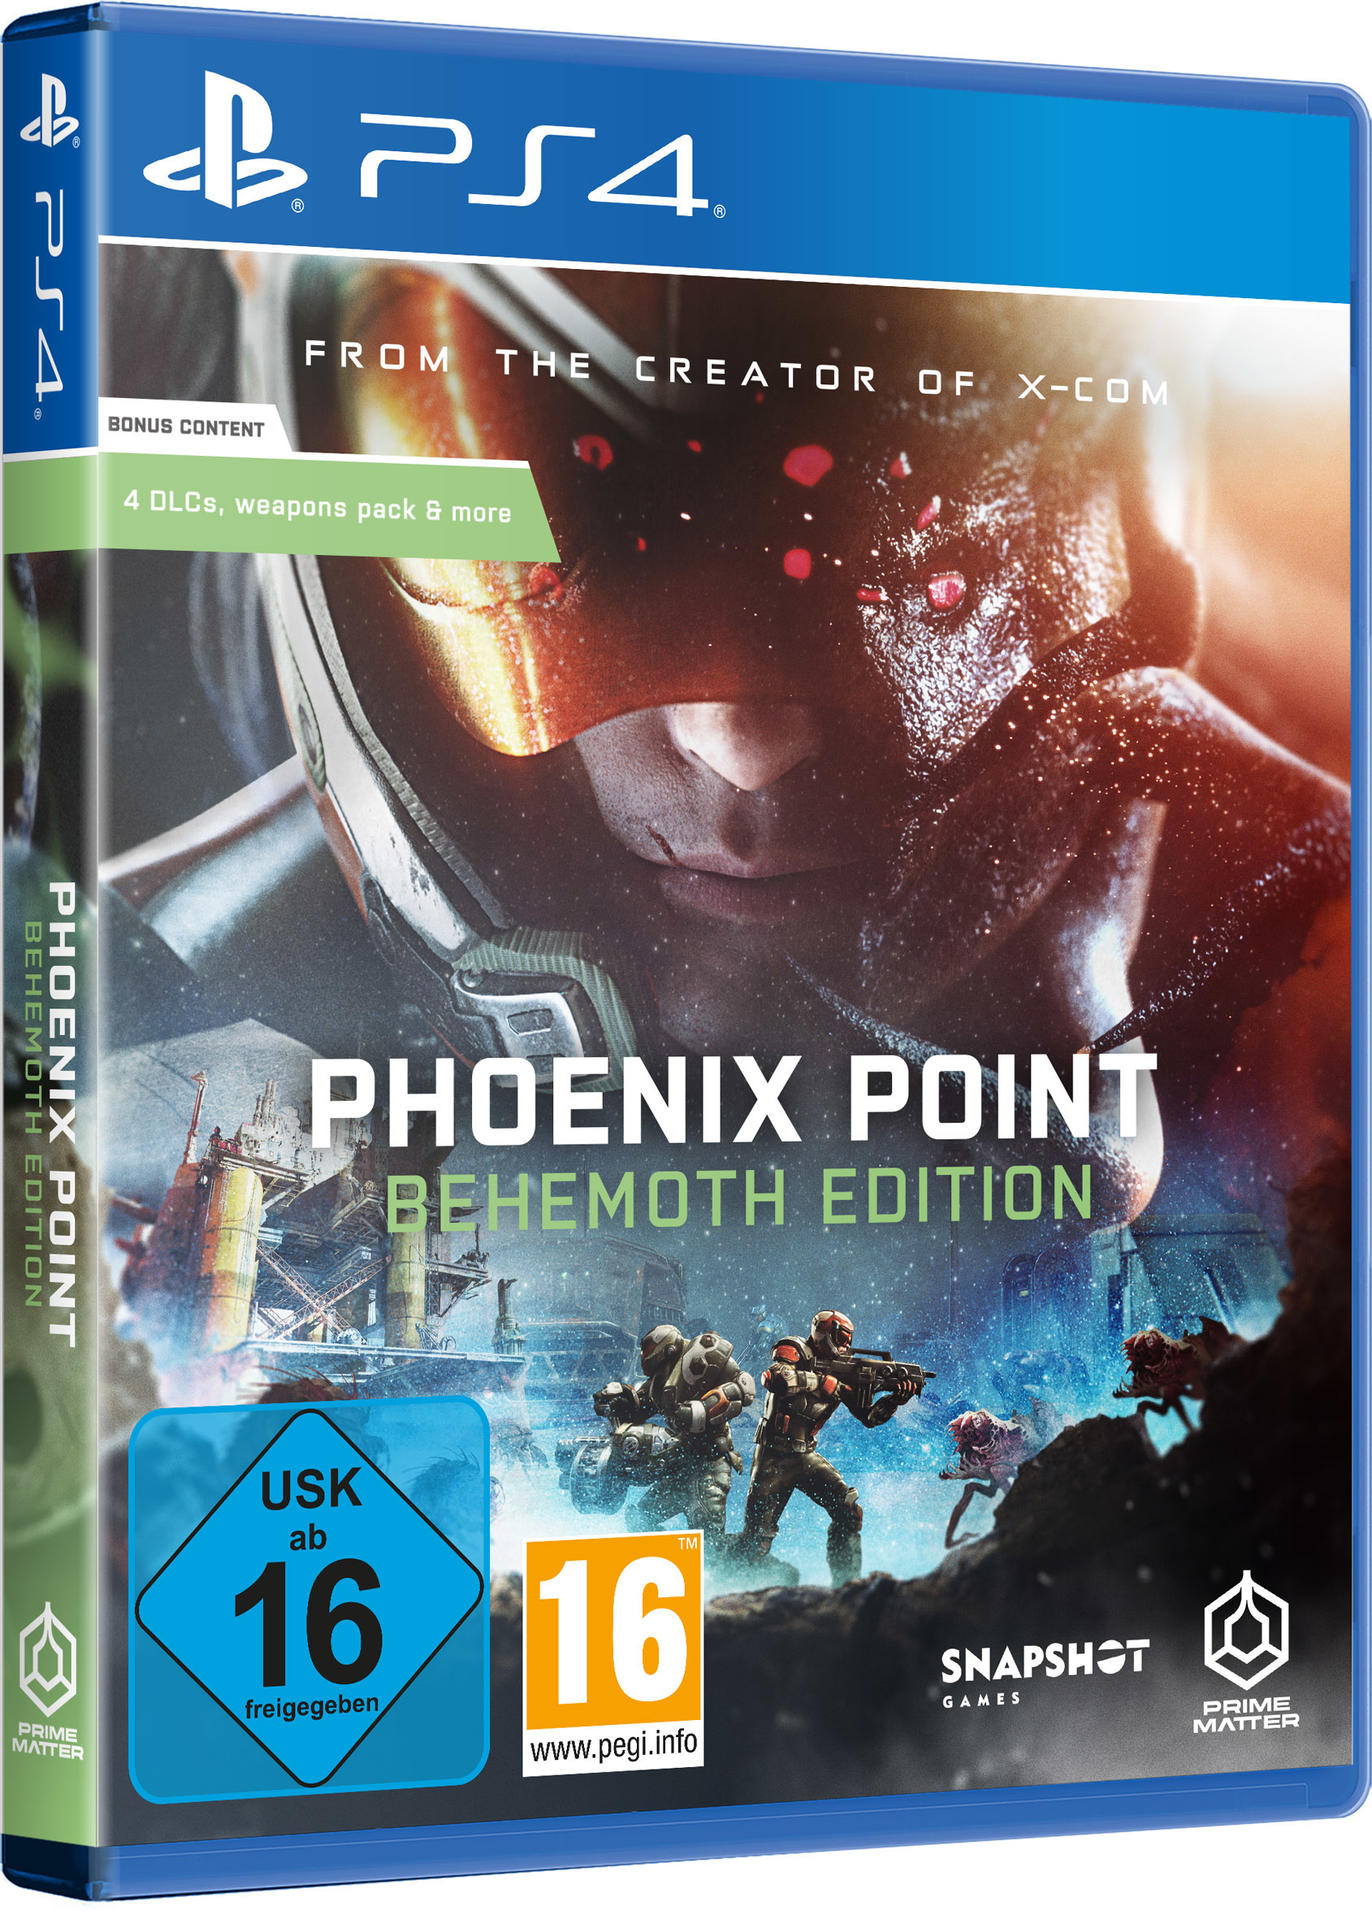 PS4 PHOENIX POINT (BEHEMOTH 4] EDITION) - [PlayStation